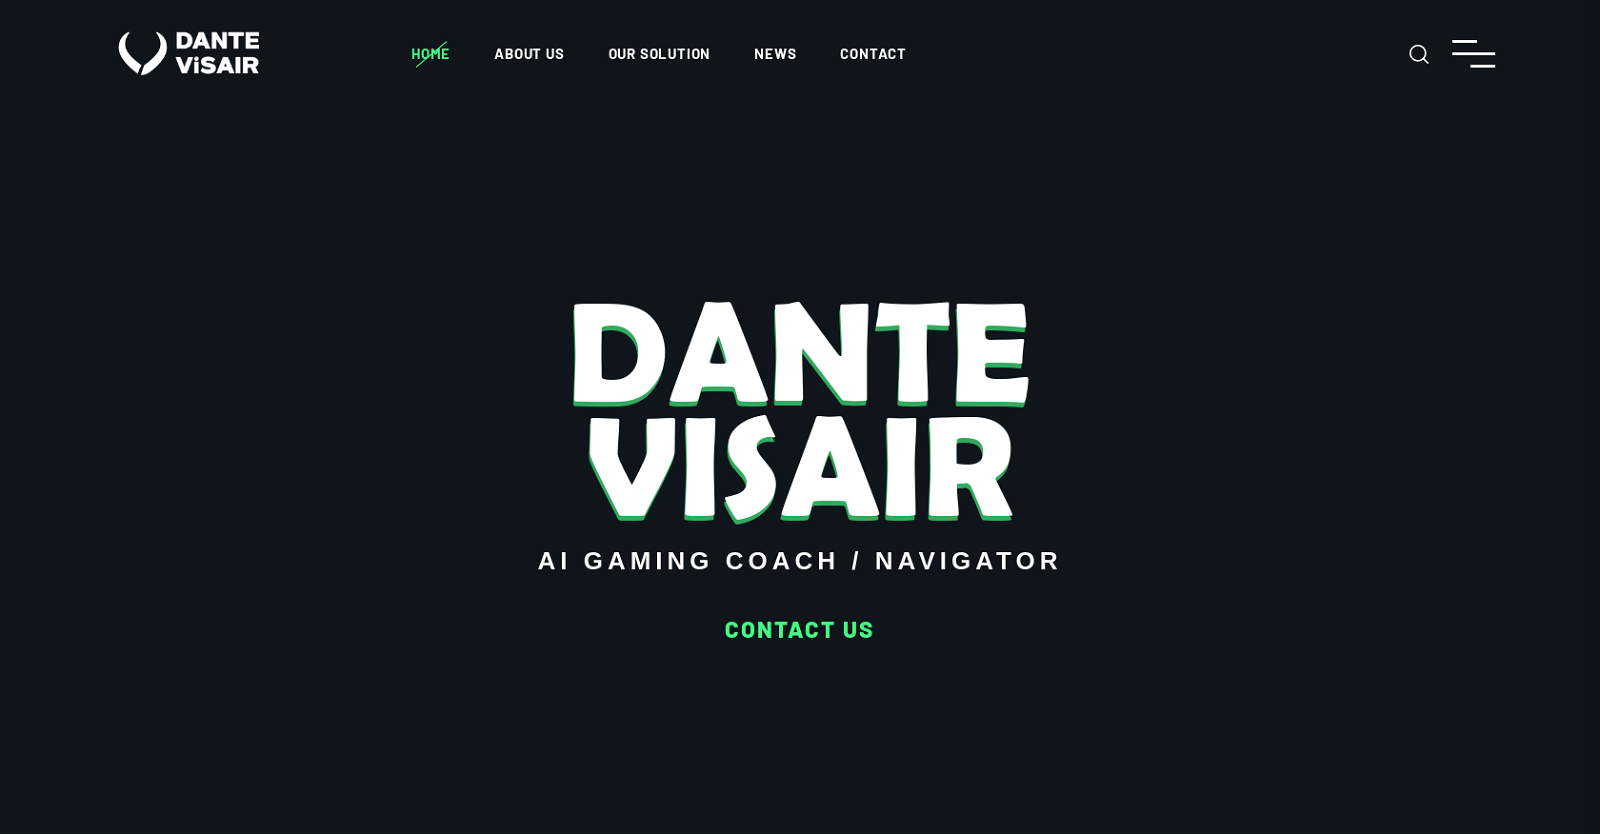 Dante Visair website